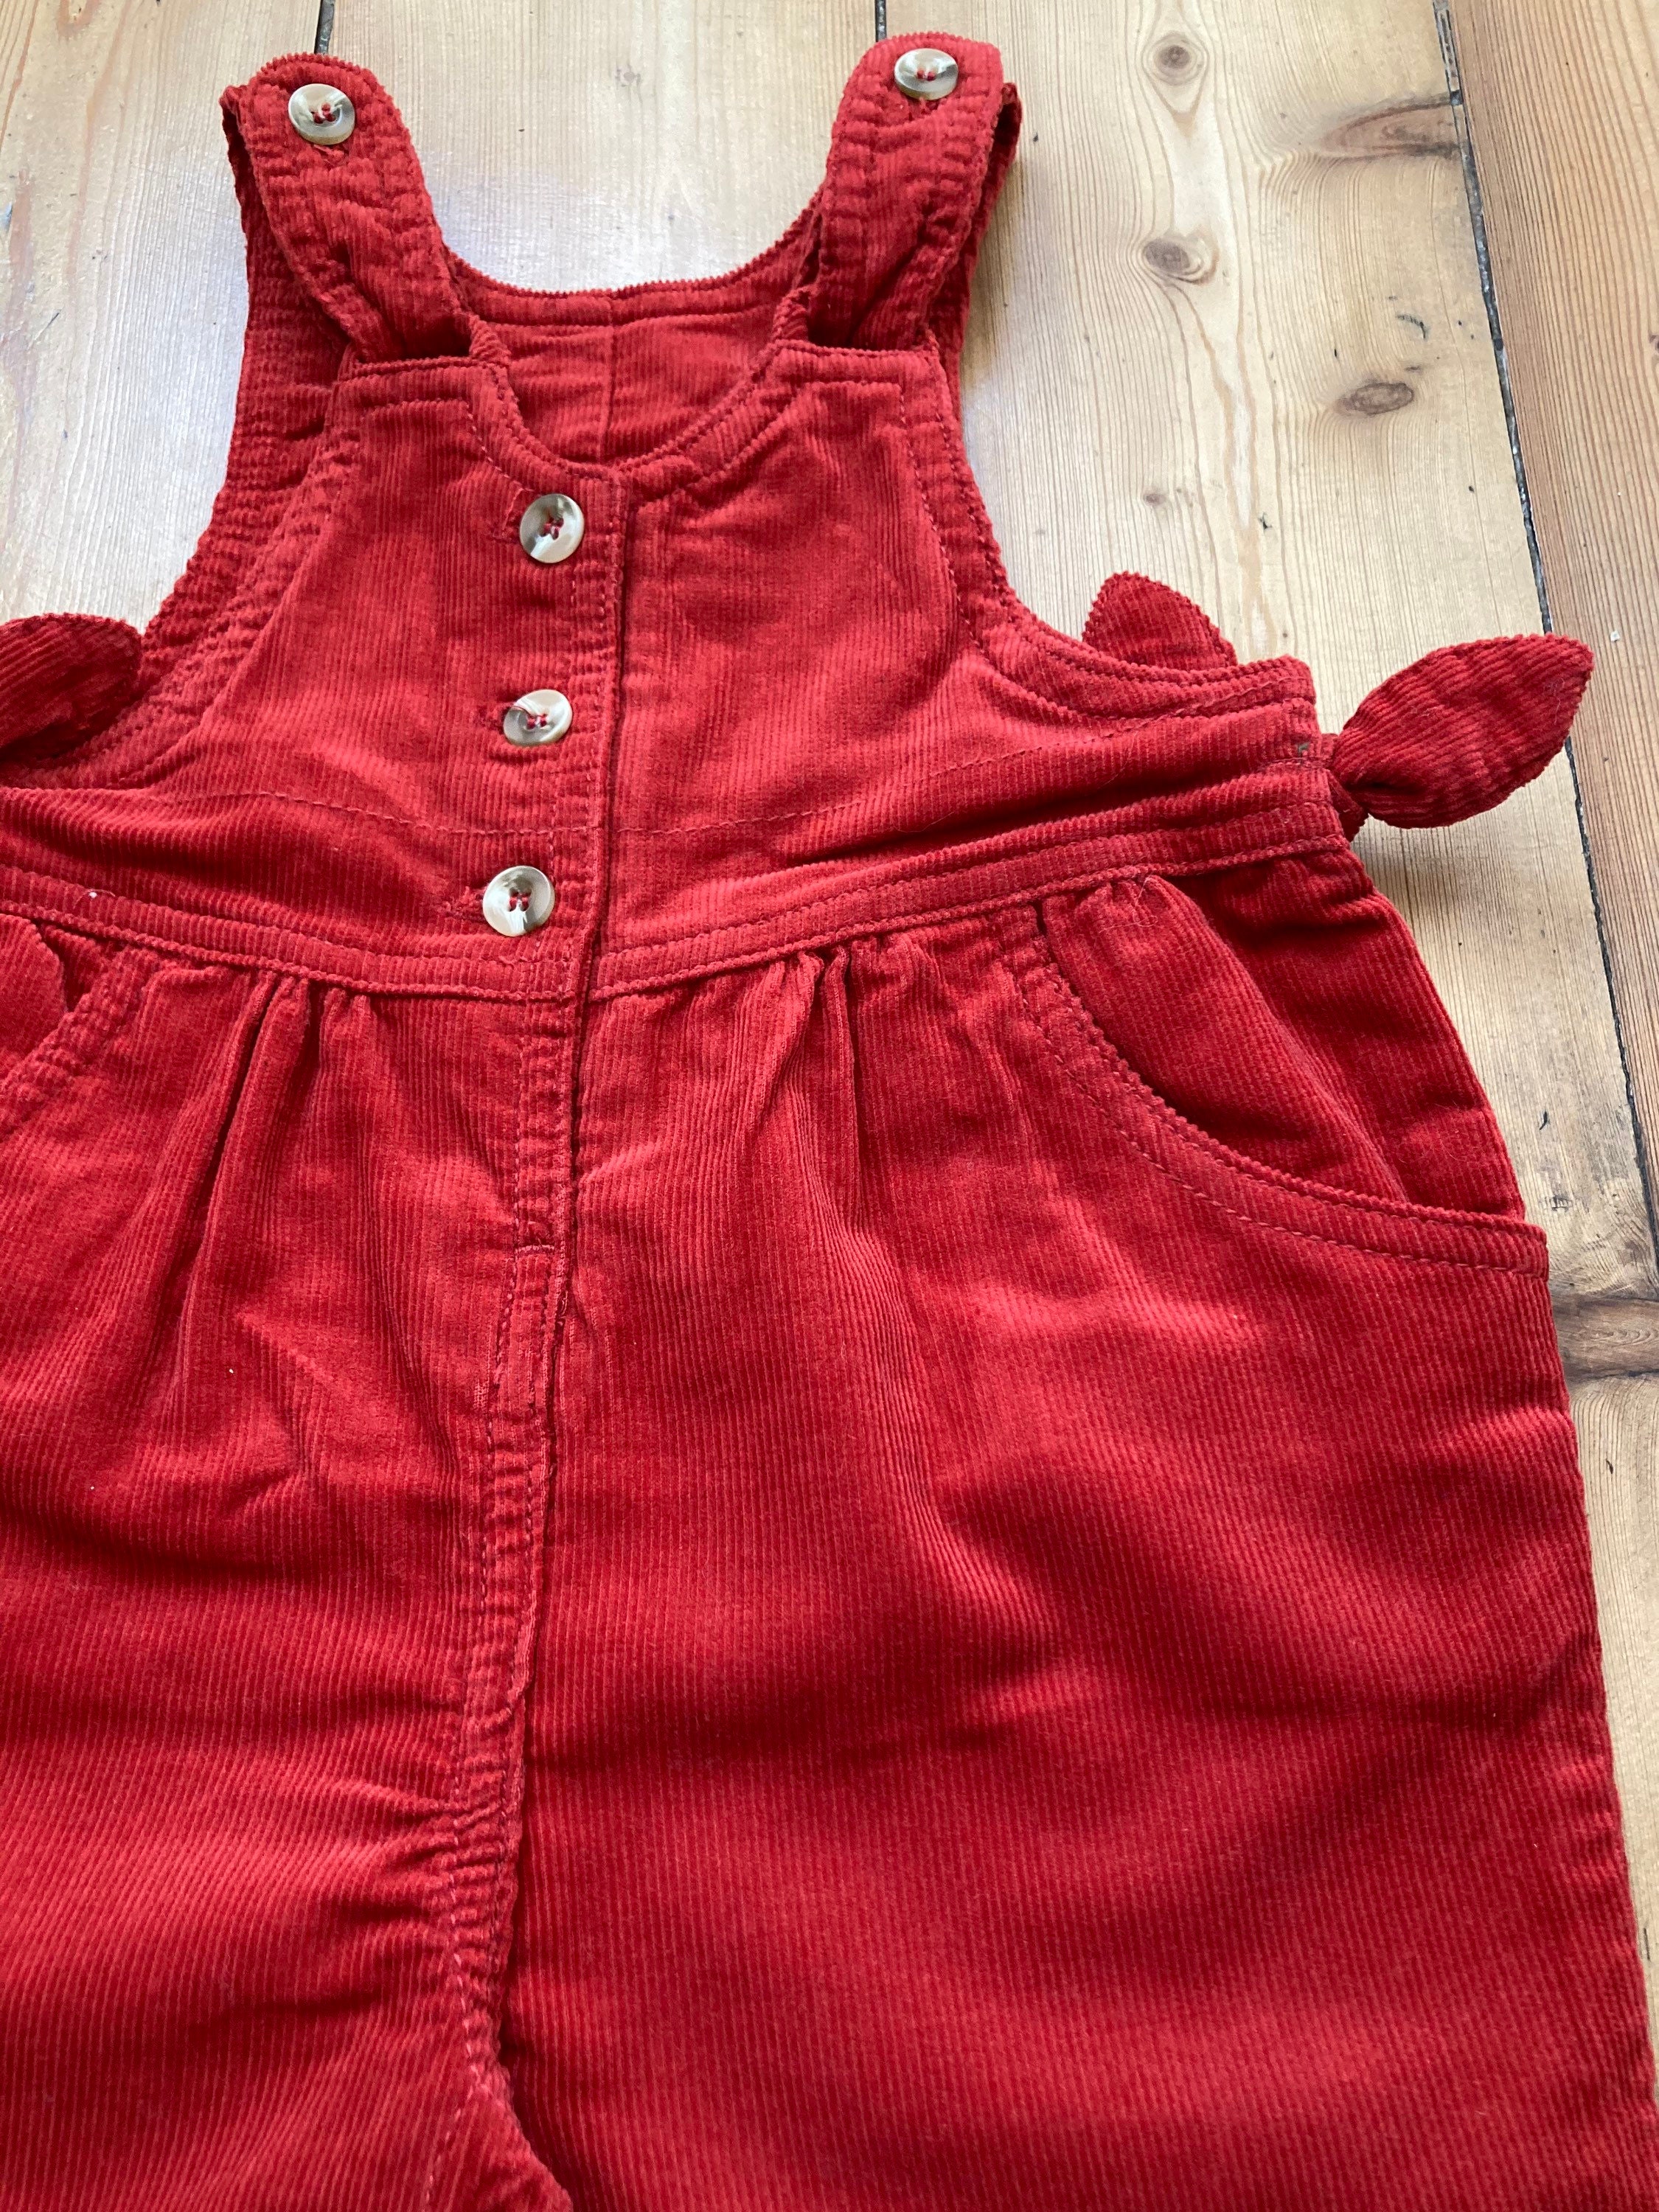 Vintage Orange Rust Corduroy dungarees overalls size range 6 | Etsy